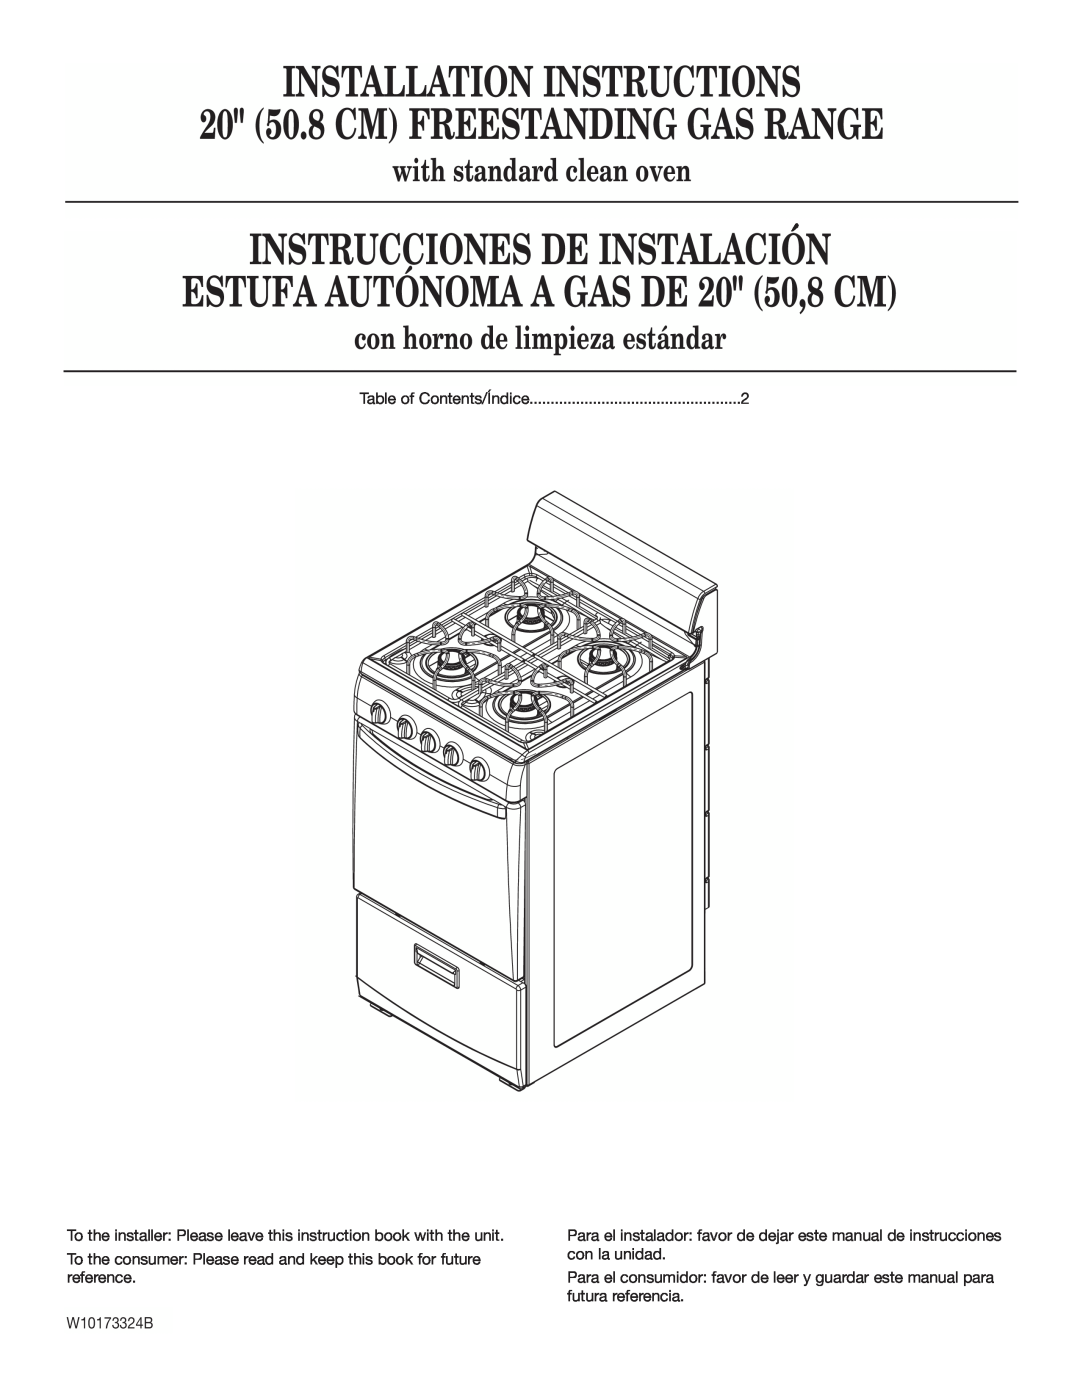 Whirlpool W10173324B installation instructions with standard clean oven, con horno de limpieza estándar 